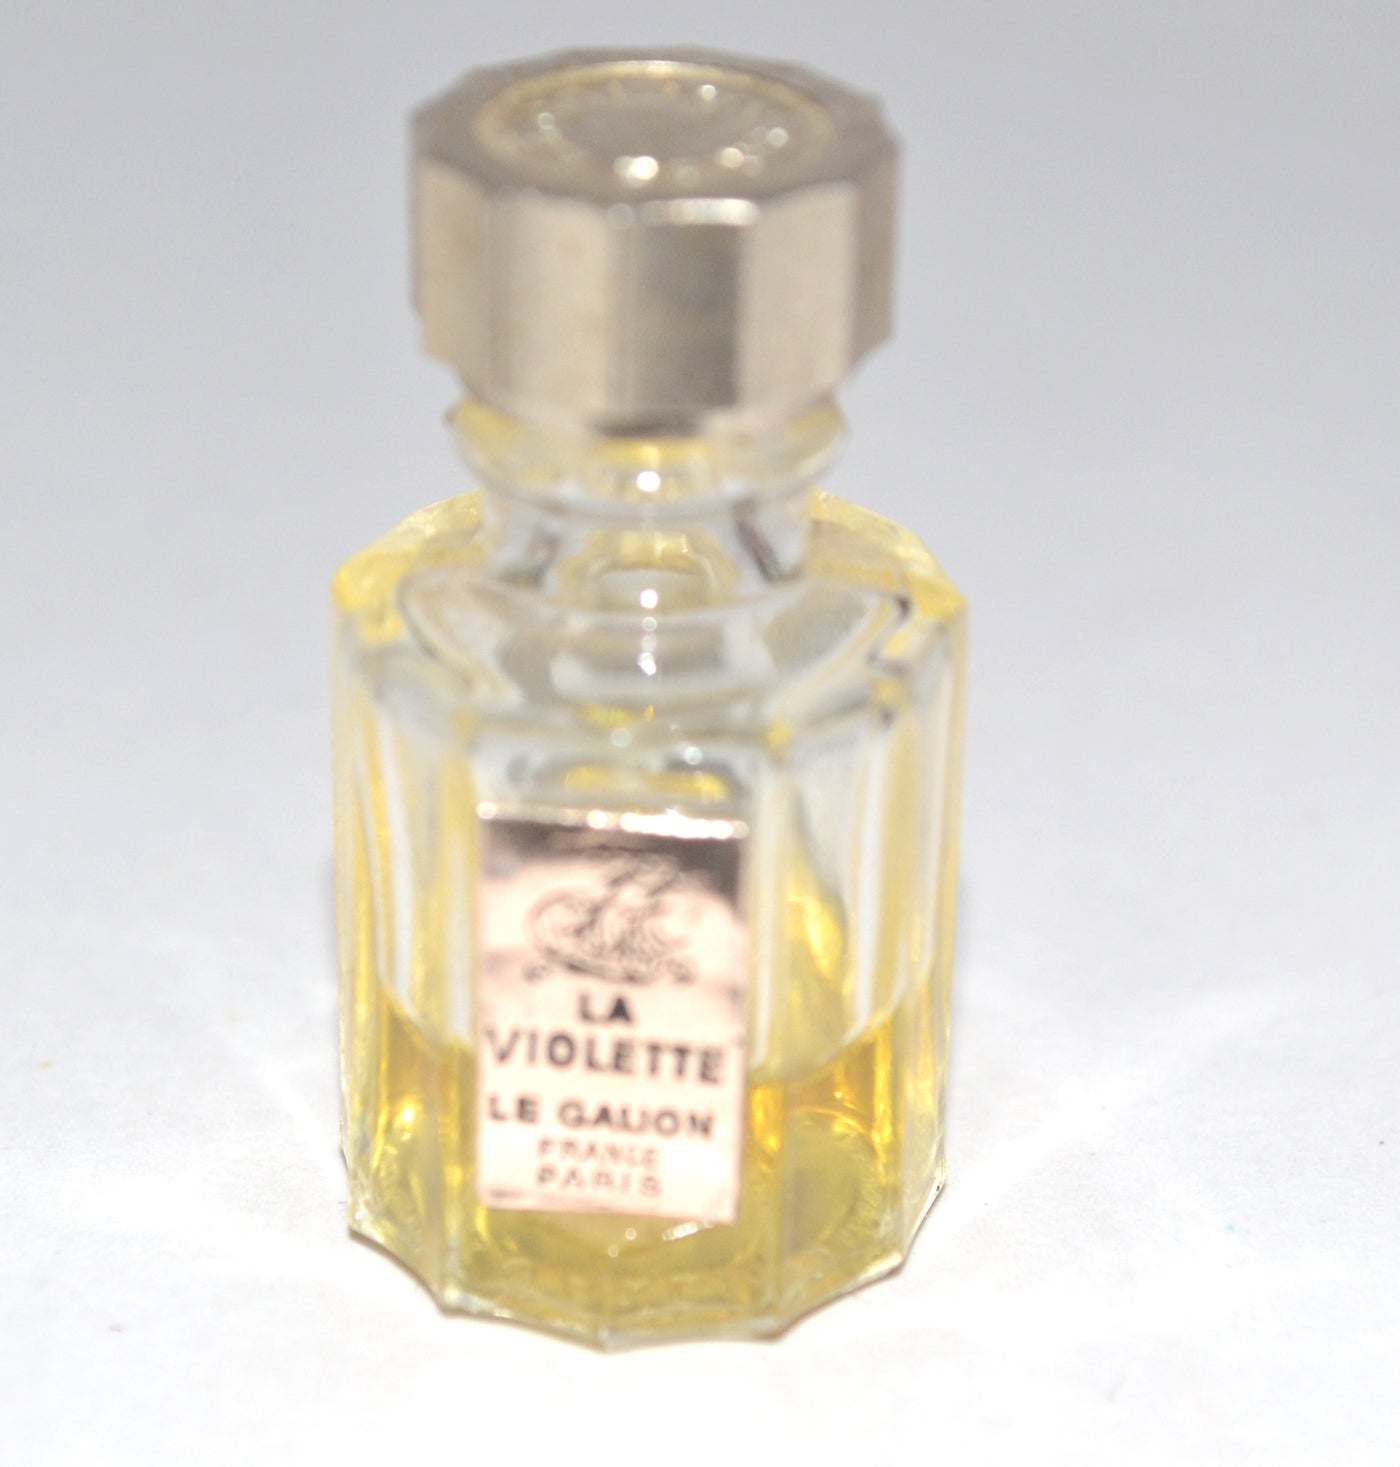 La Gallion La Violette Perfume Micro Mini